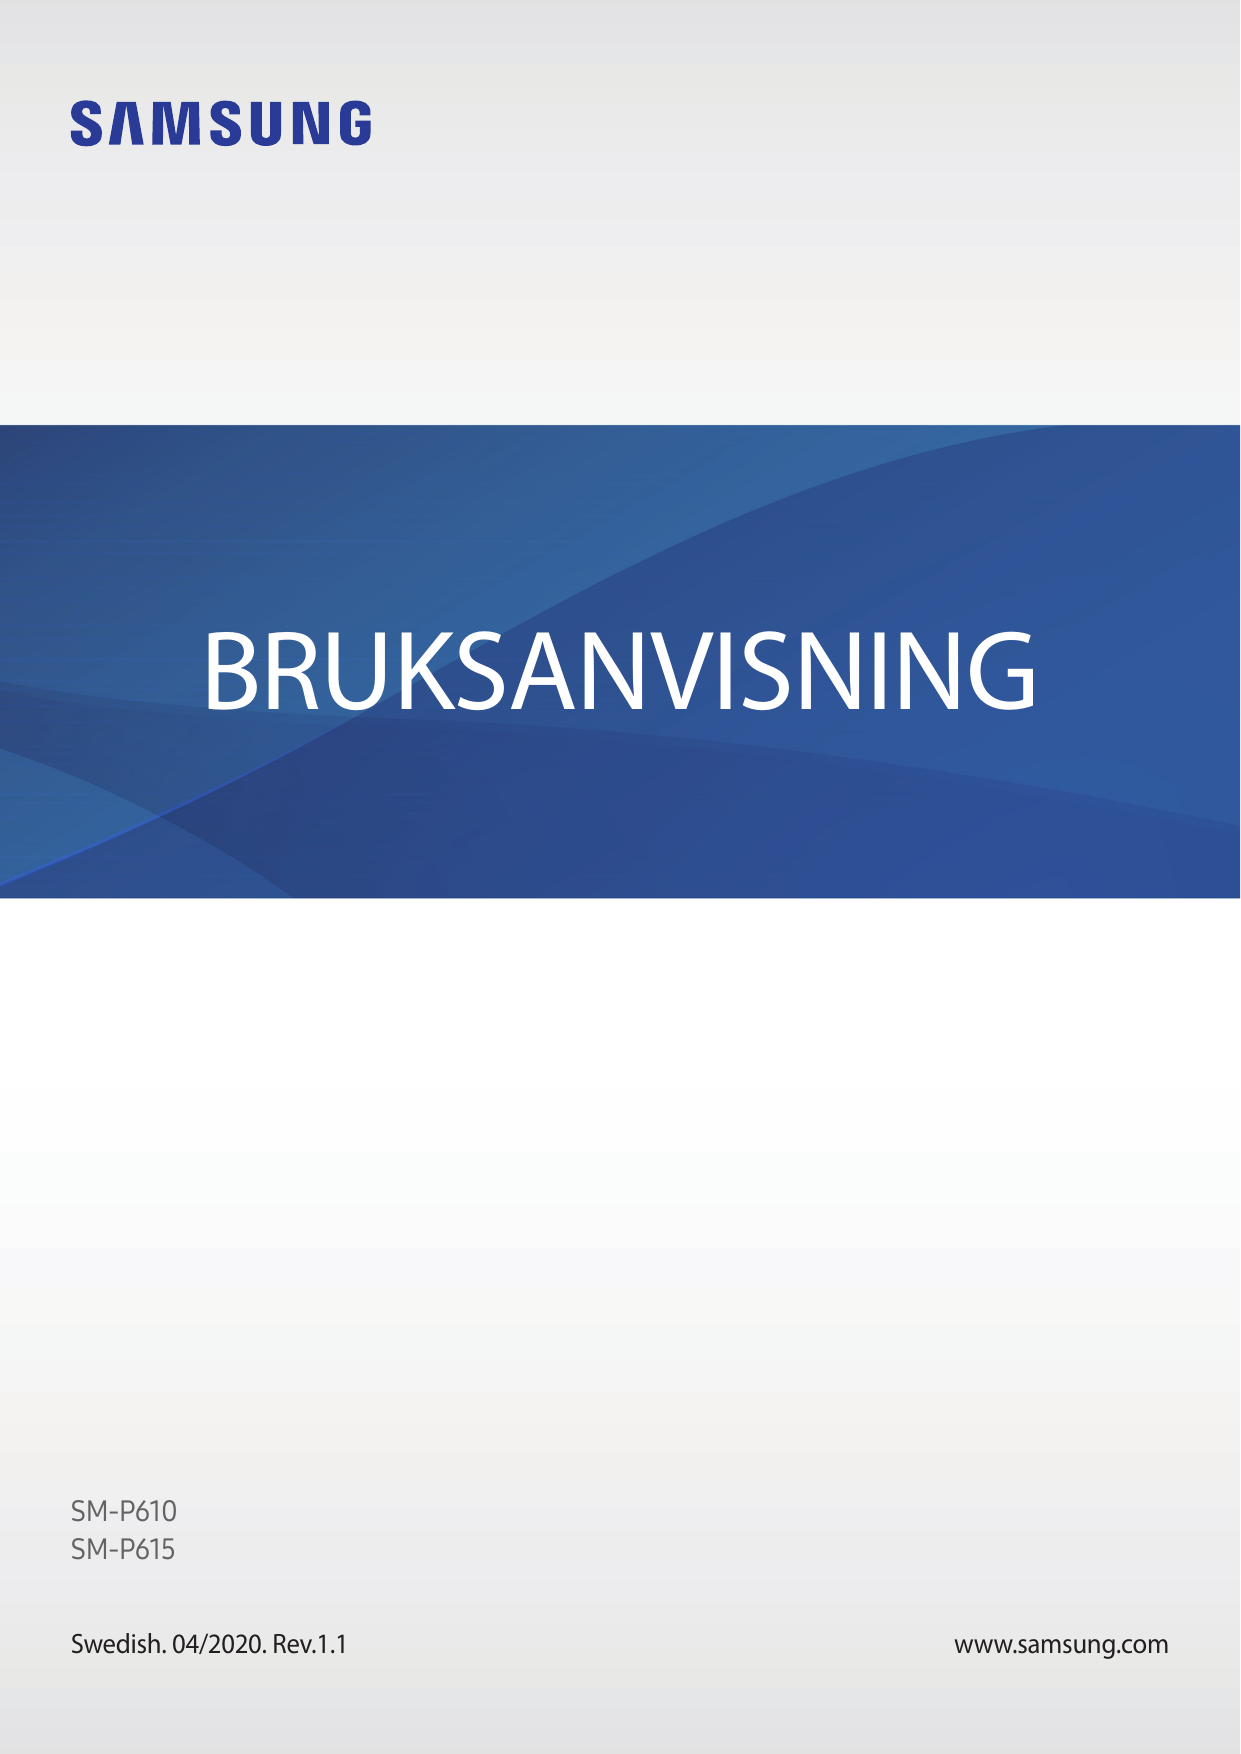 BRUKSANVISNINGSM-P610SM-P615Swedish. 04/2020. Rev.1.1www.samsung.com